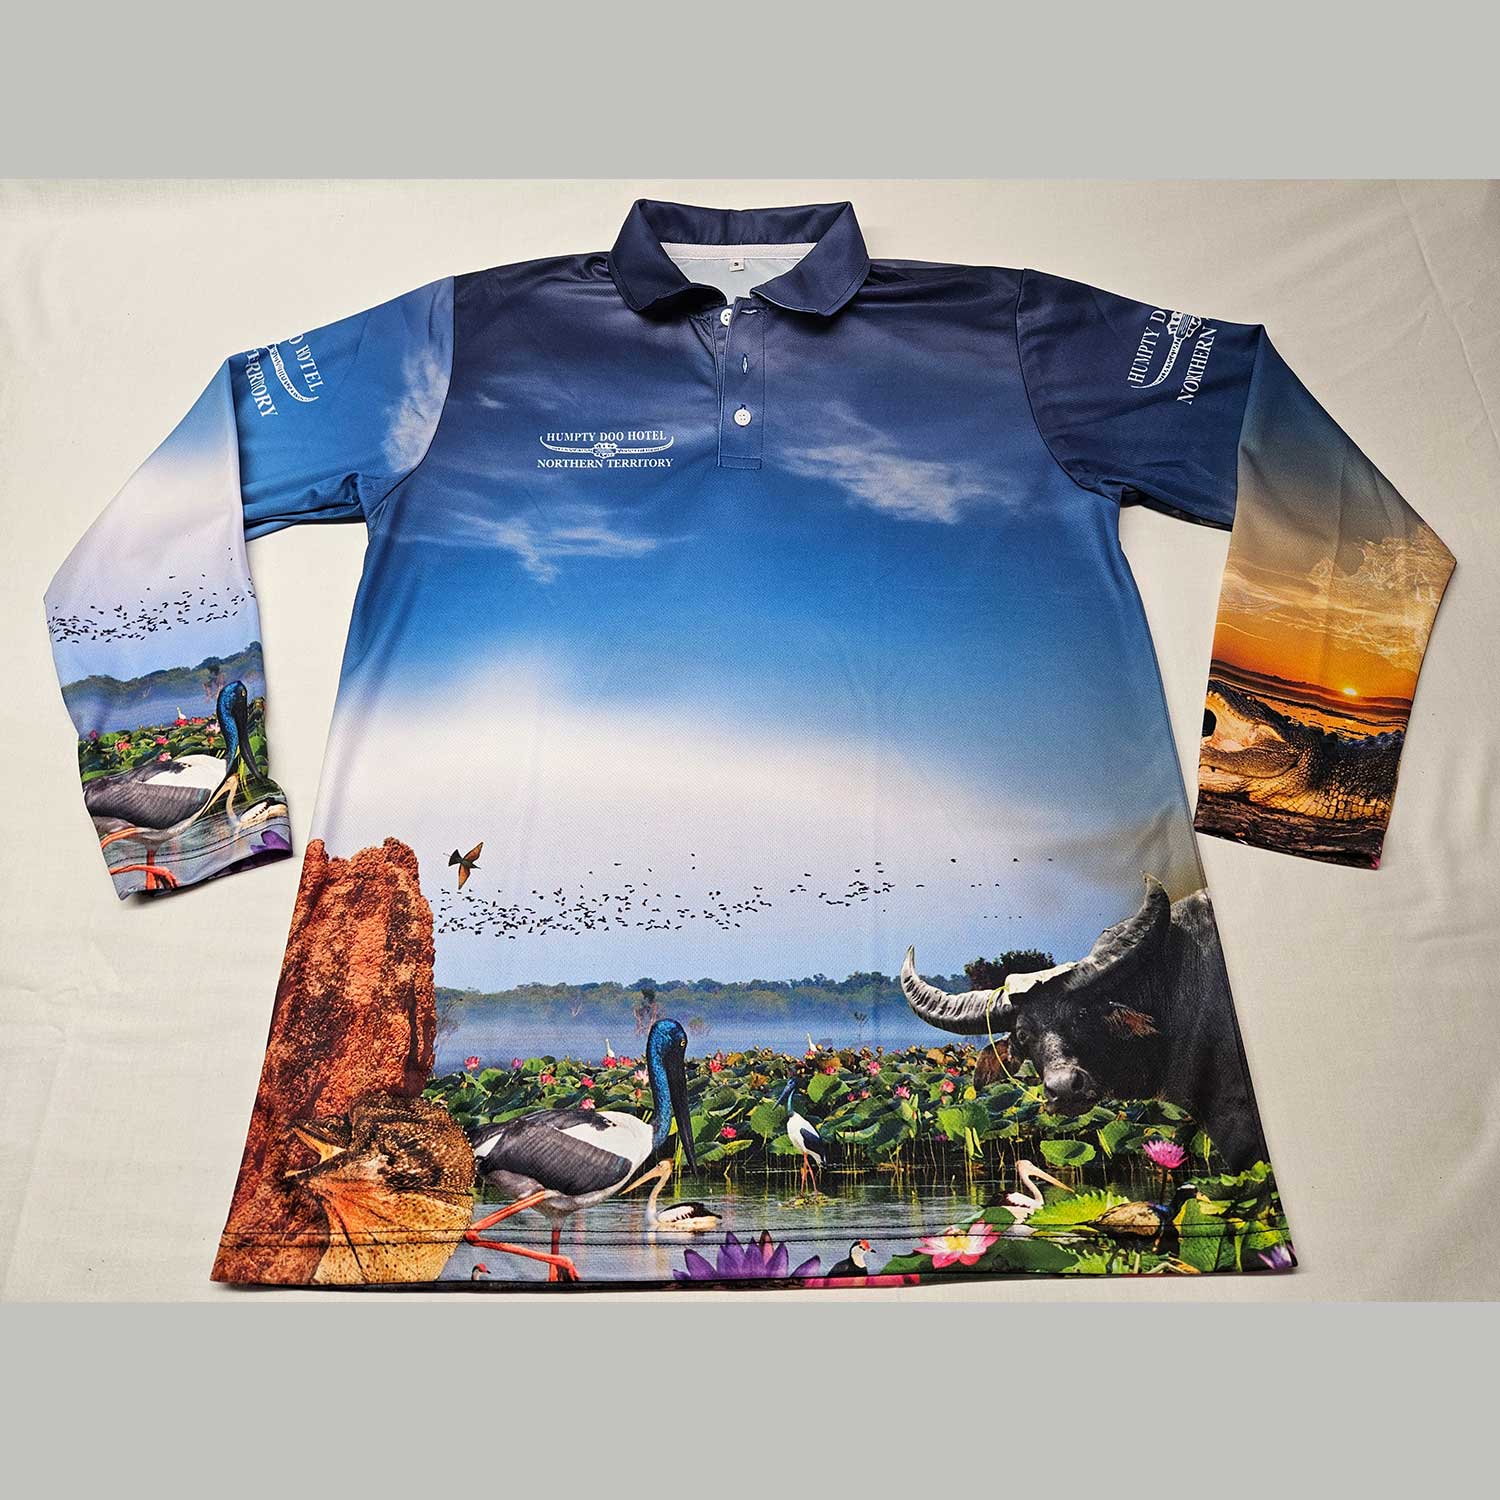 FISHING DRESSES – Fishing Shirt by LJMDesign